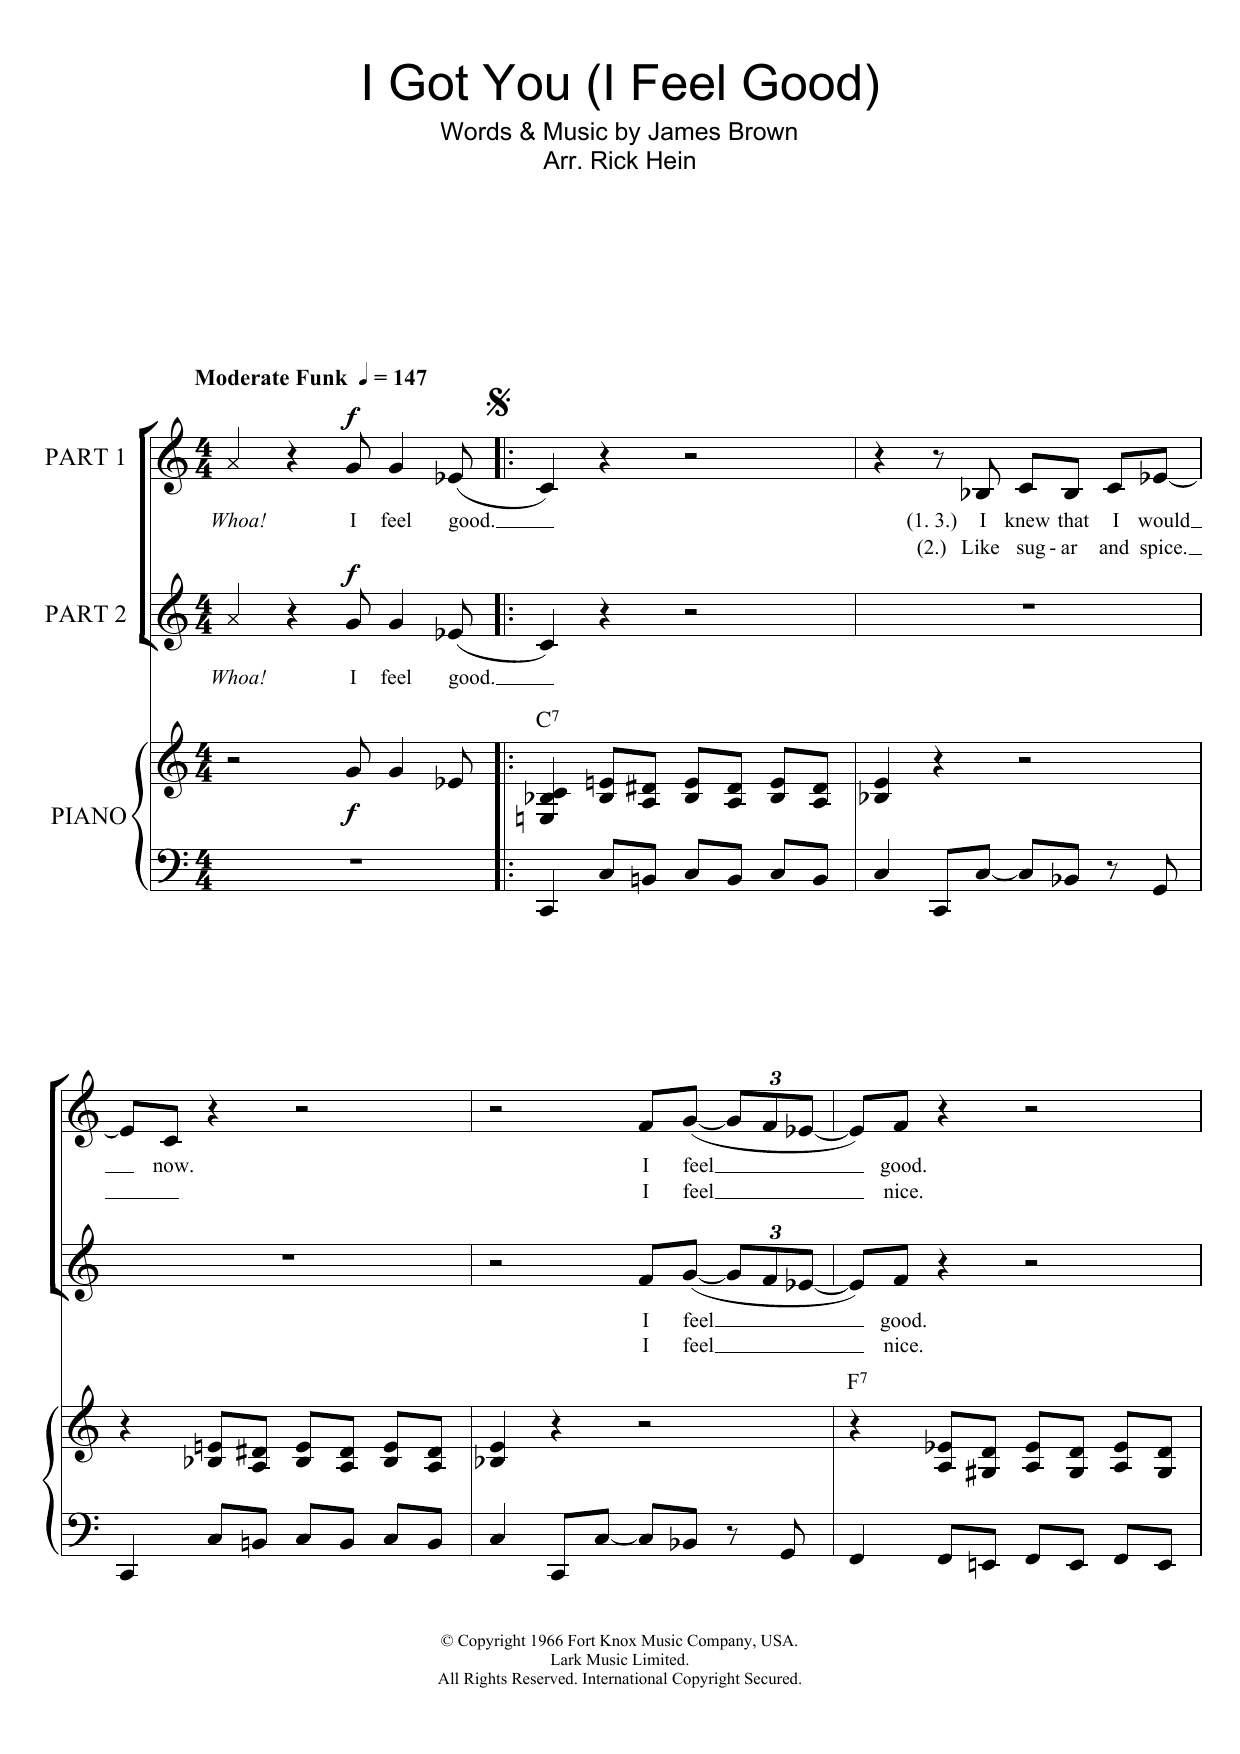 James Brown I Got You (I Feel Good) (arr. Rick Hein) Sheet Music Notes & Chords for 2-Part Choir - Download or Print PDF